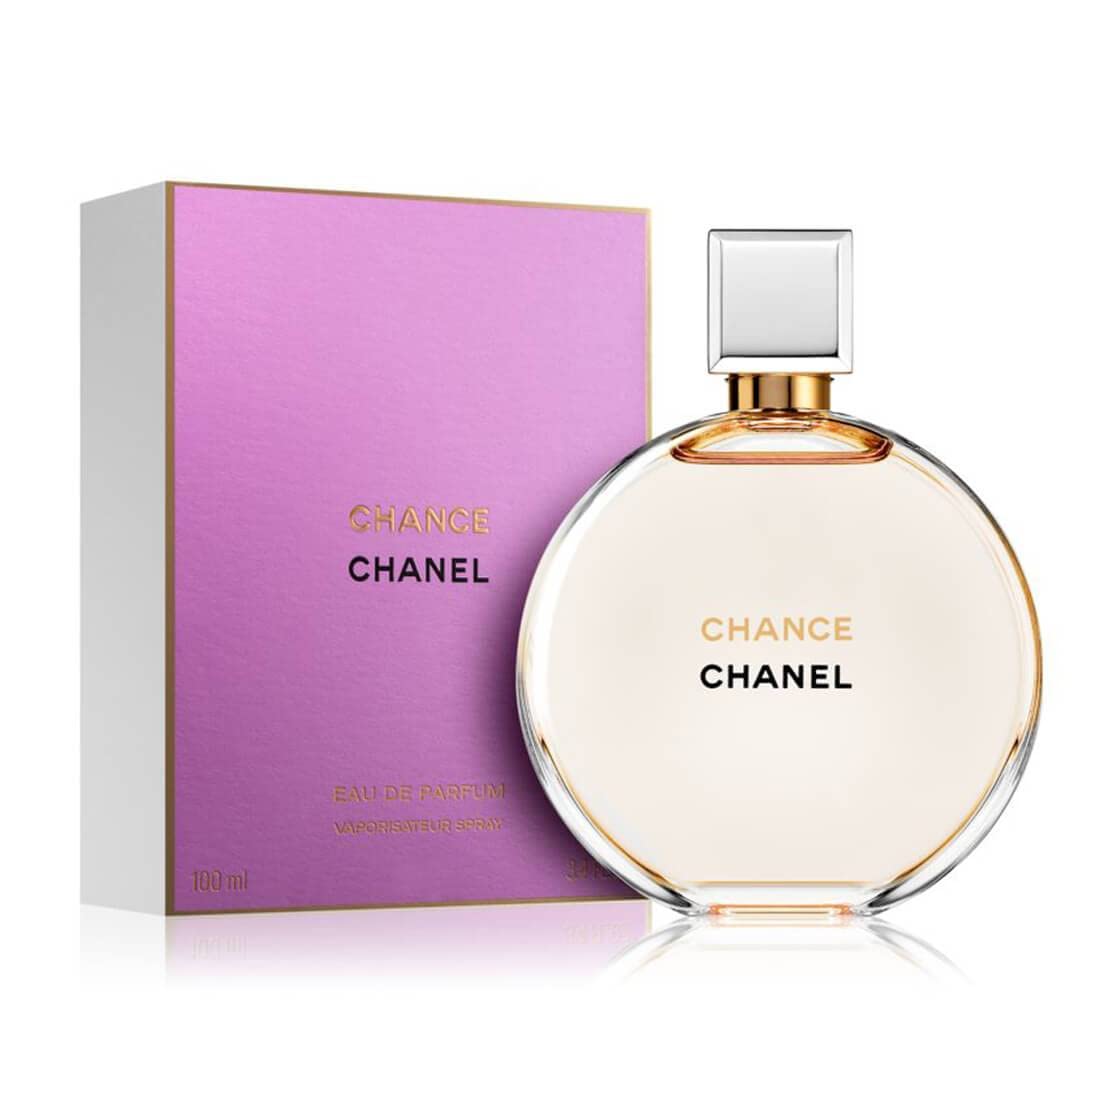 Chanel Chance eau parfum 100ml Essencias Japan